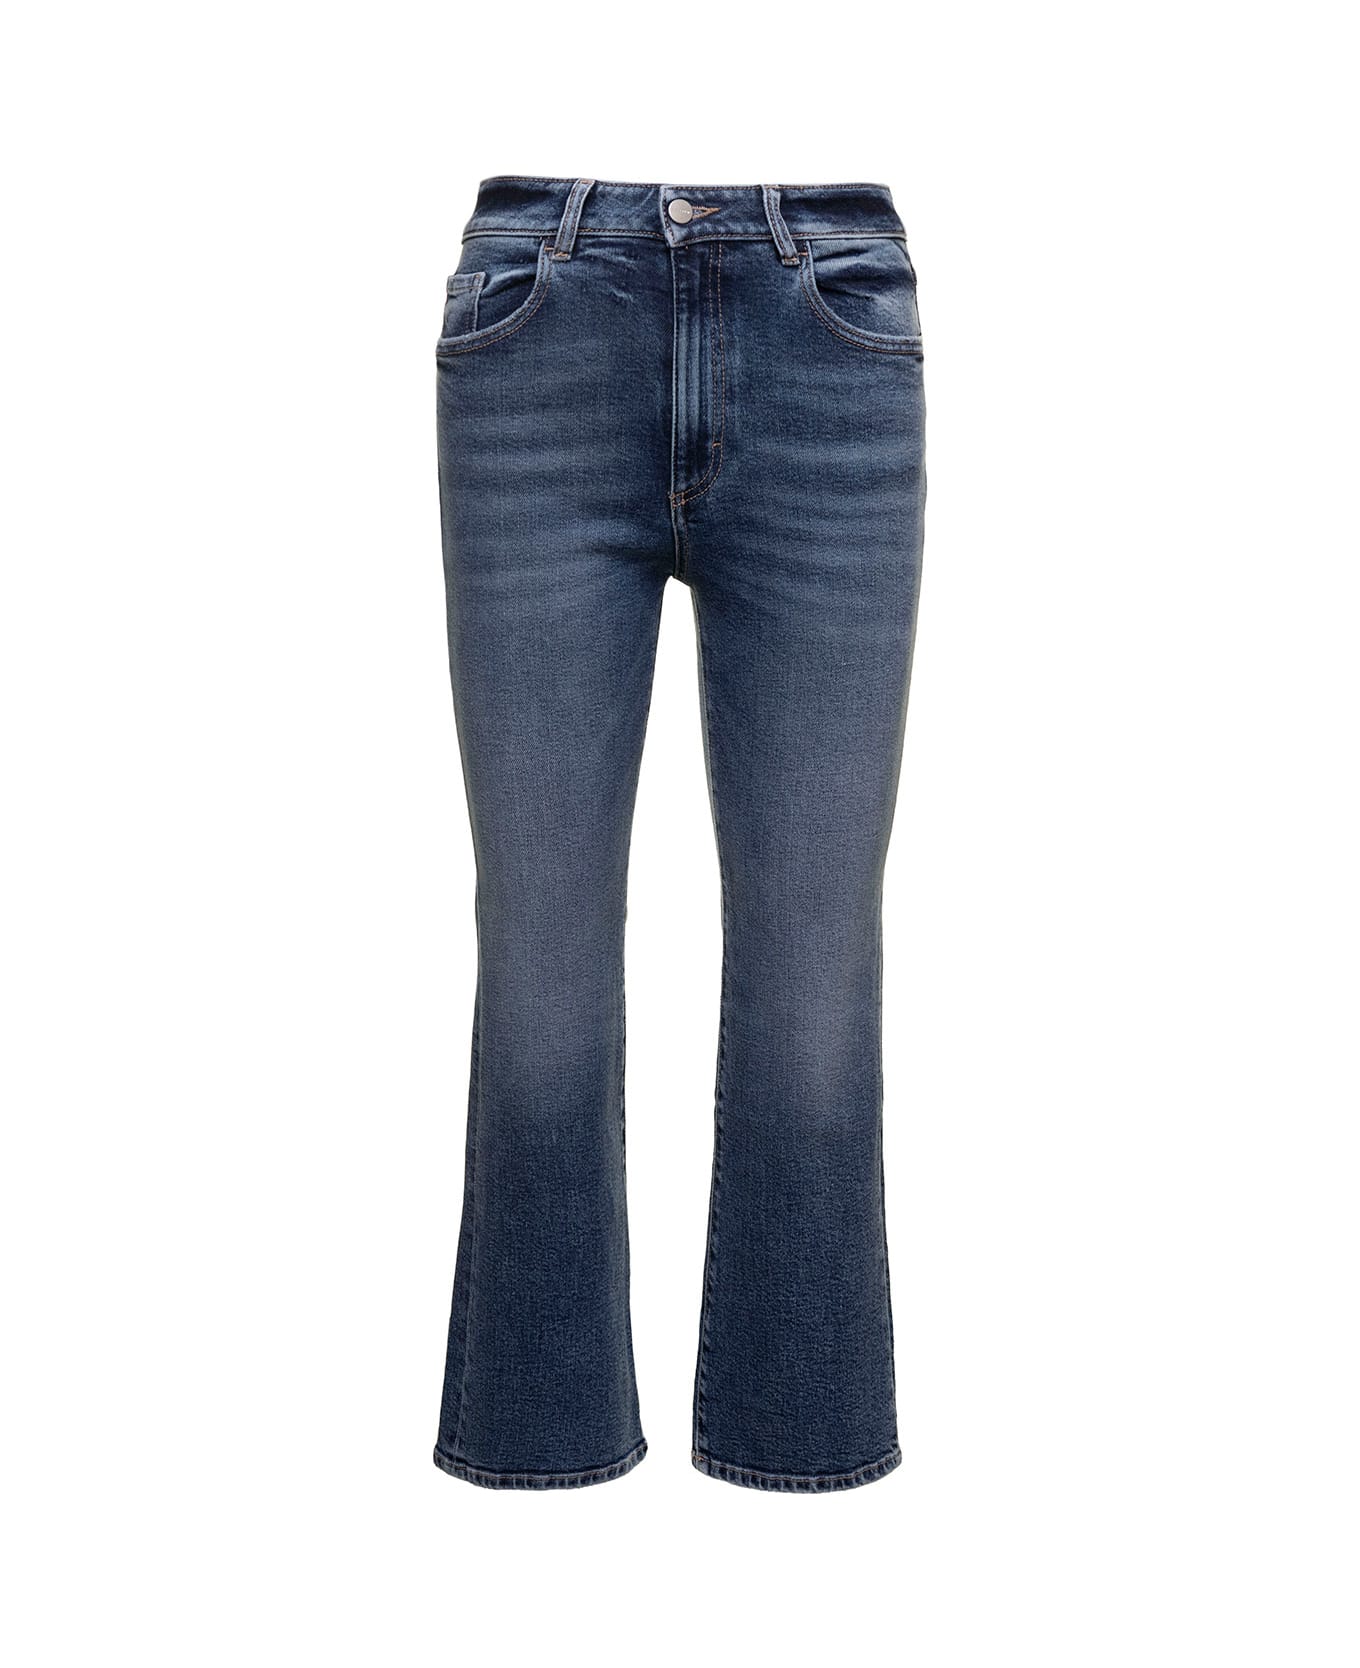 Icon Denim Black High-waisted Slightly Flared Jeans In Cotton Denim Woman - Blu